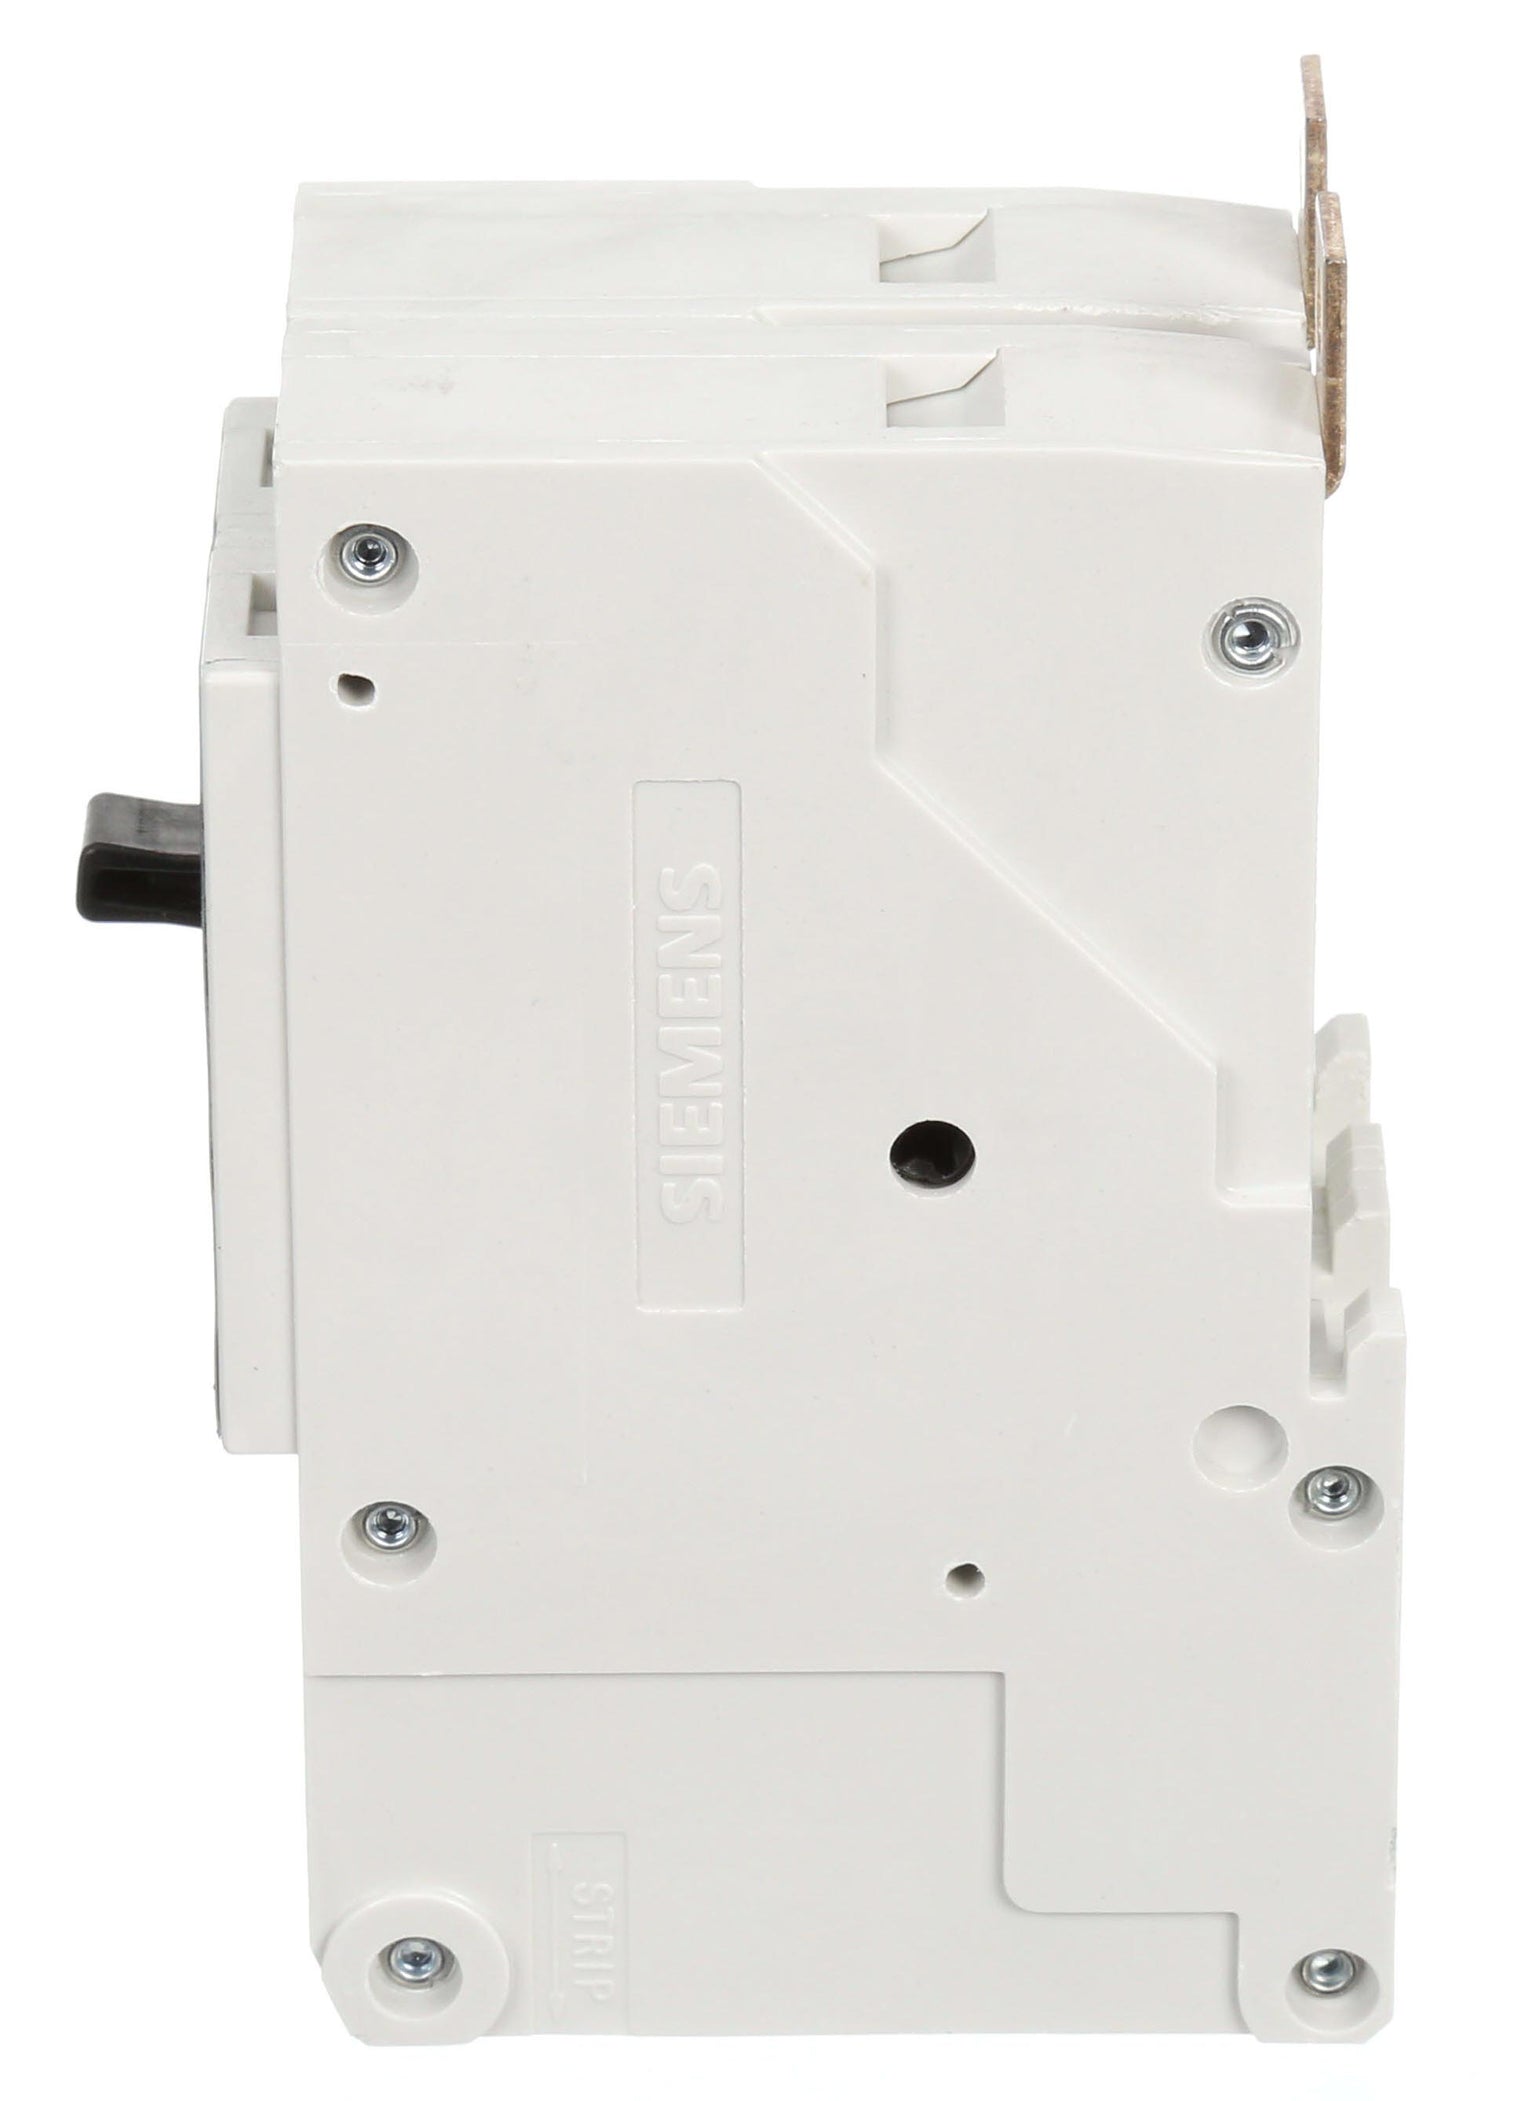 NGB2B070B - Siemens - Molded Case Circuit Breaker